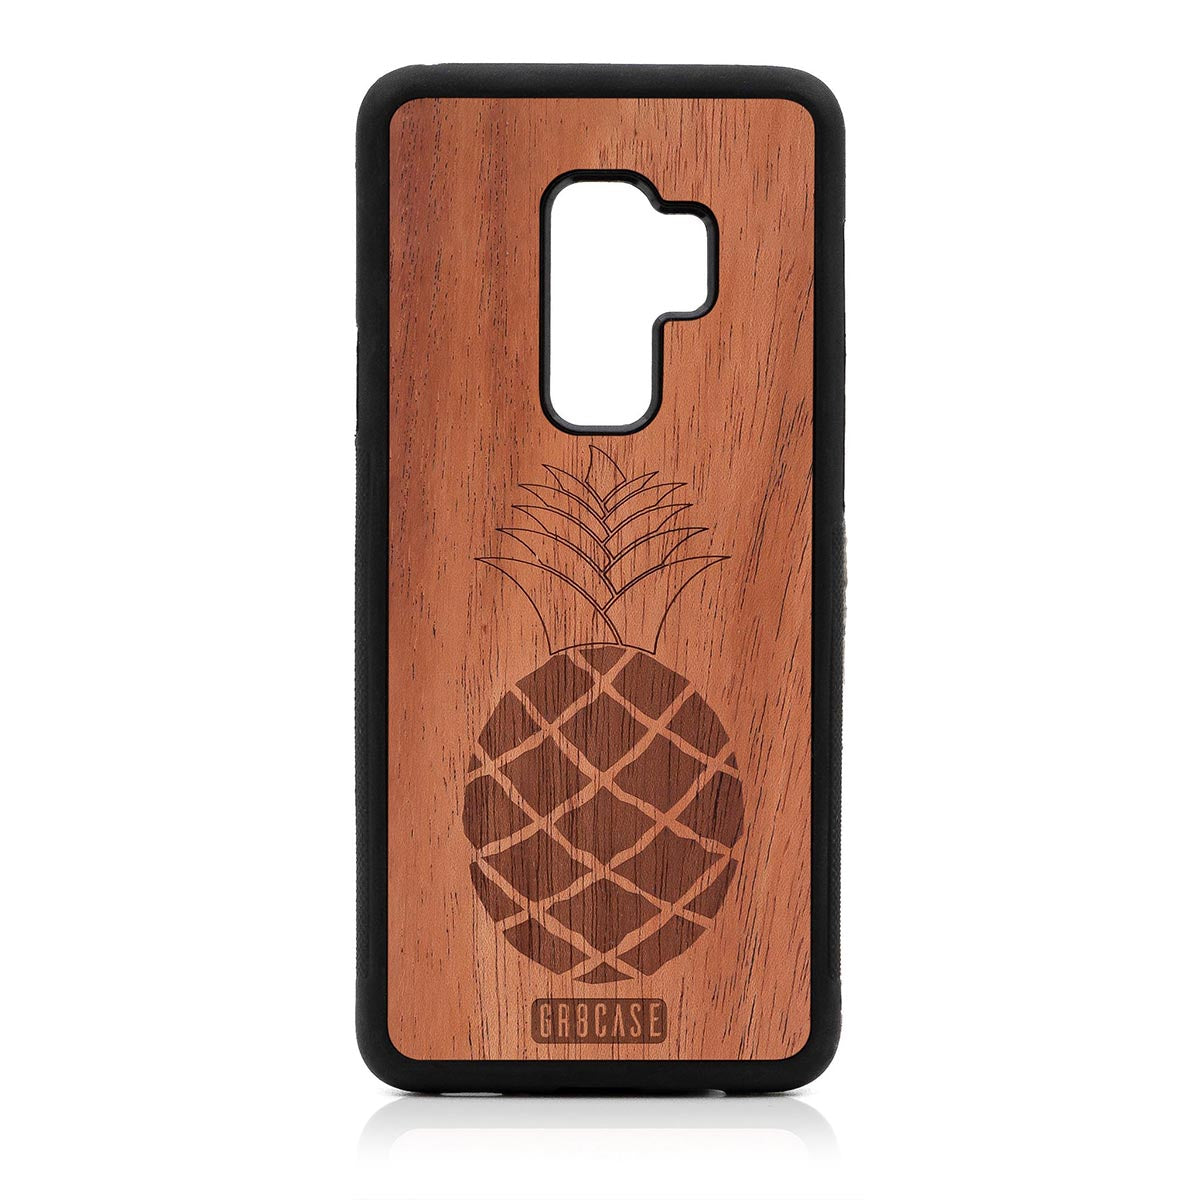 Pineapple Design Wood Case Samsung Galaxy S9 Plus by GR8CASE